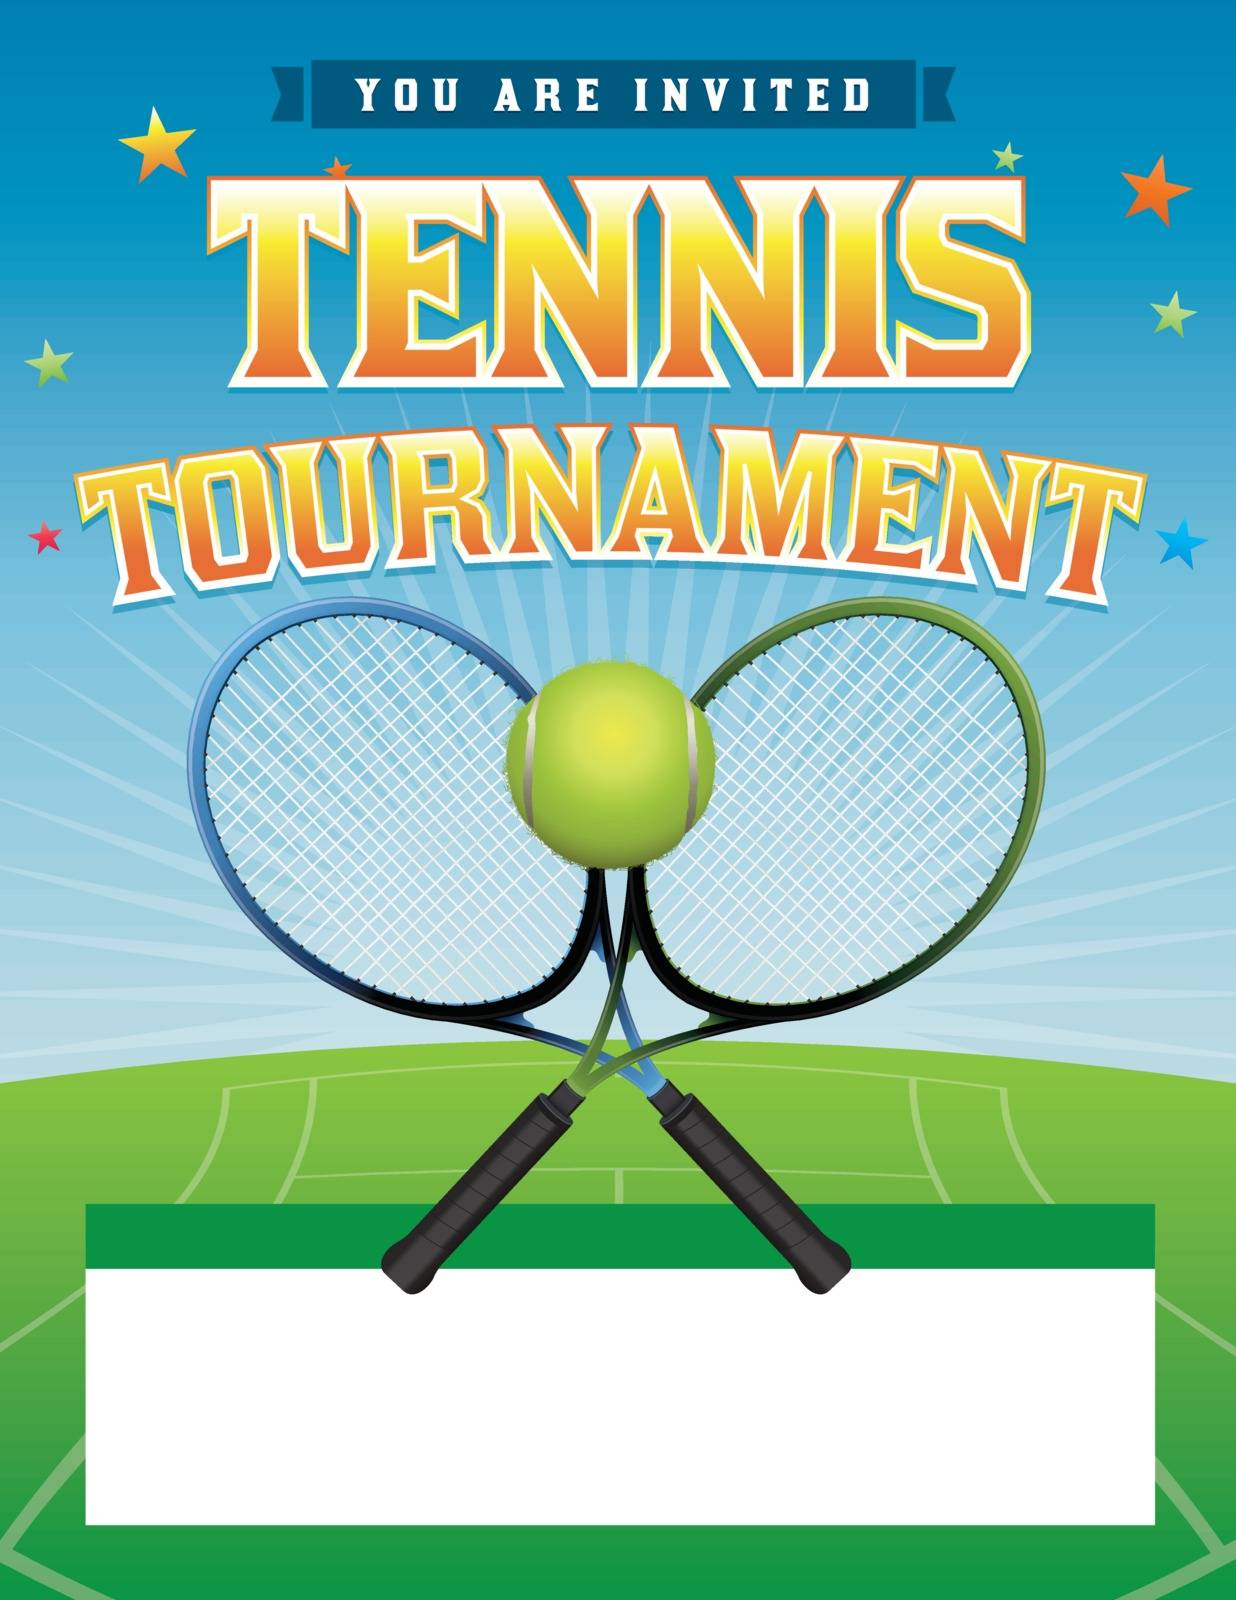 Tennis Tournament illustration by enterlinedesign